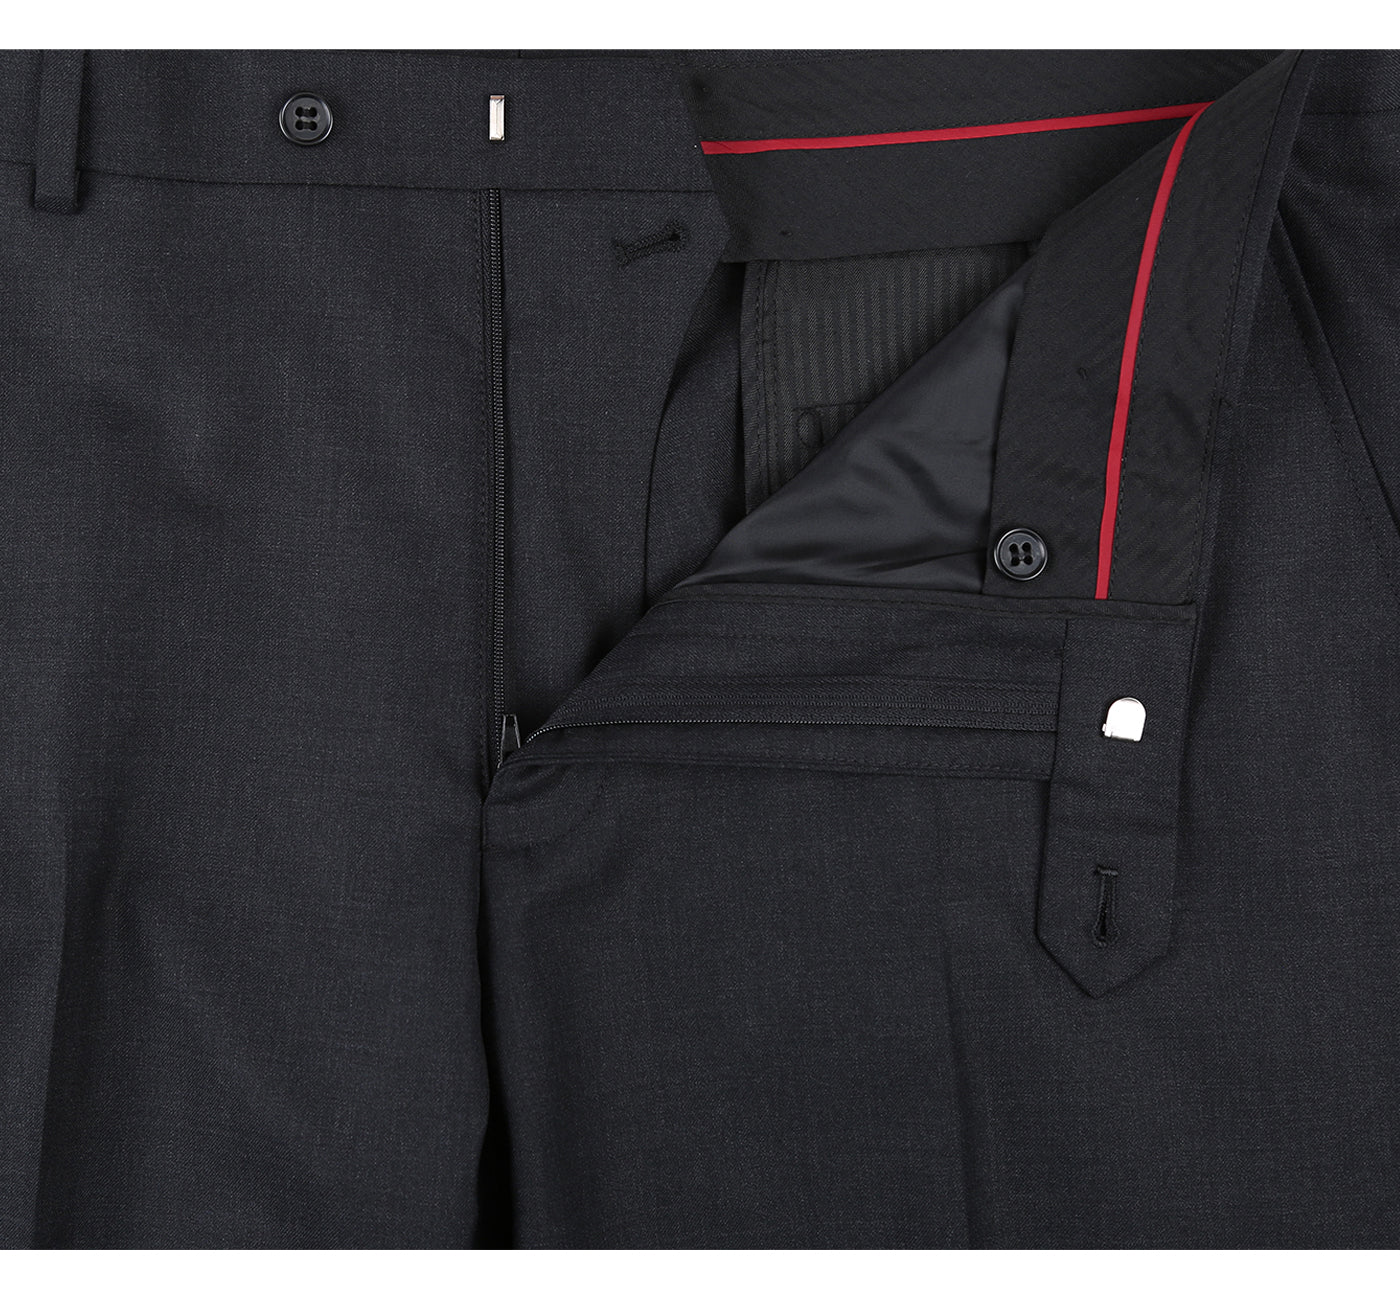 555-3 Men's Classic Fit Flat Front Charcoal Grey Wool Suit Pant